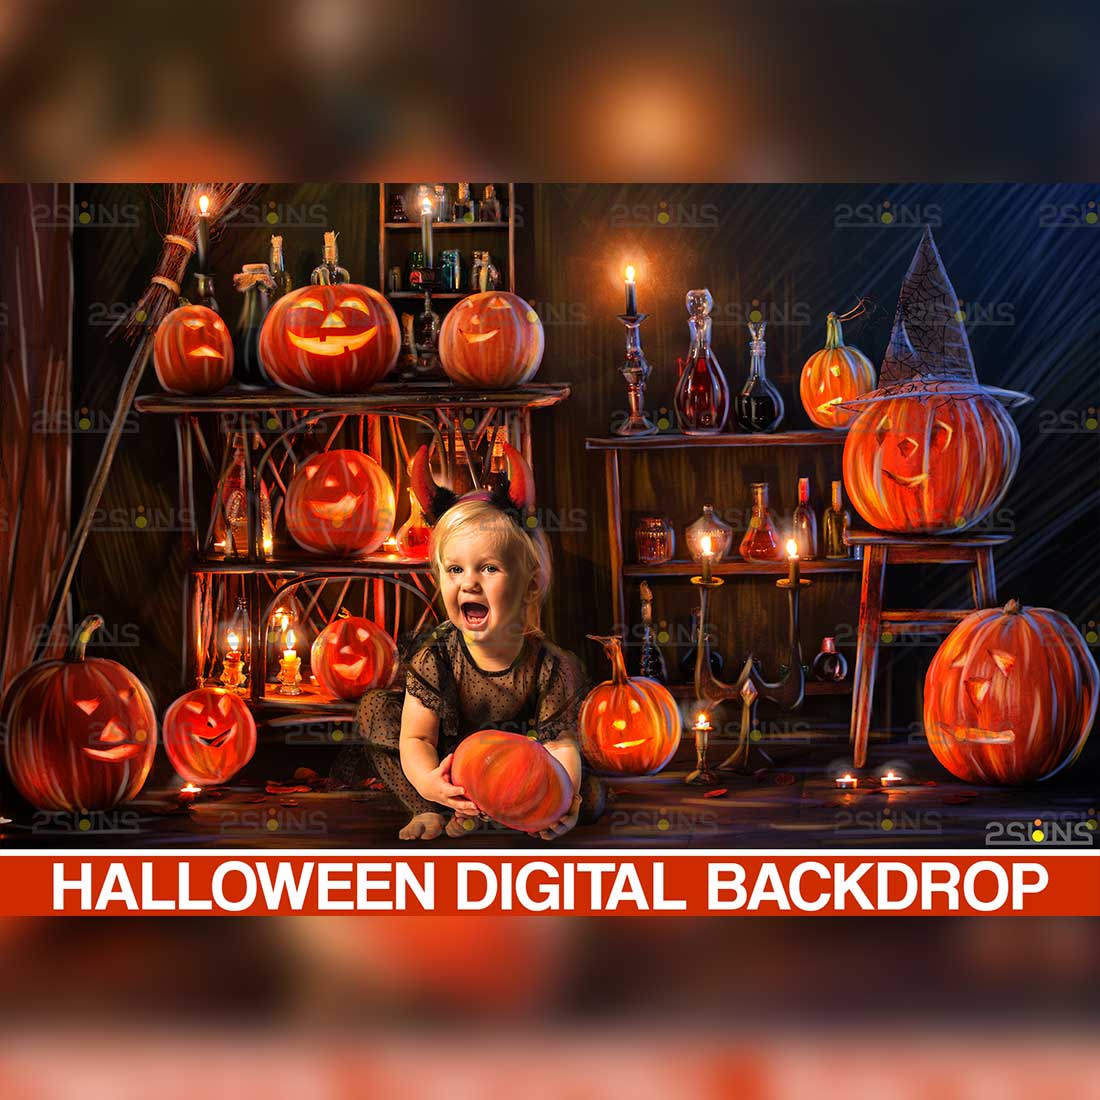 Pumpkin Halloween Photoshop Backdrop Cover Image.